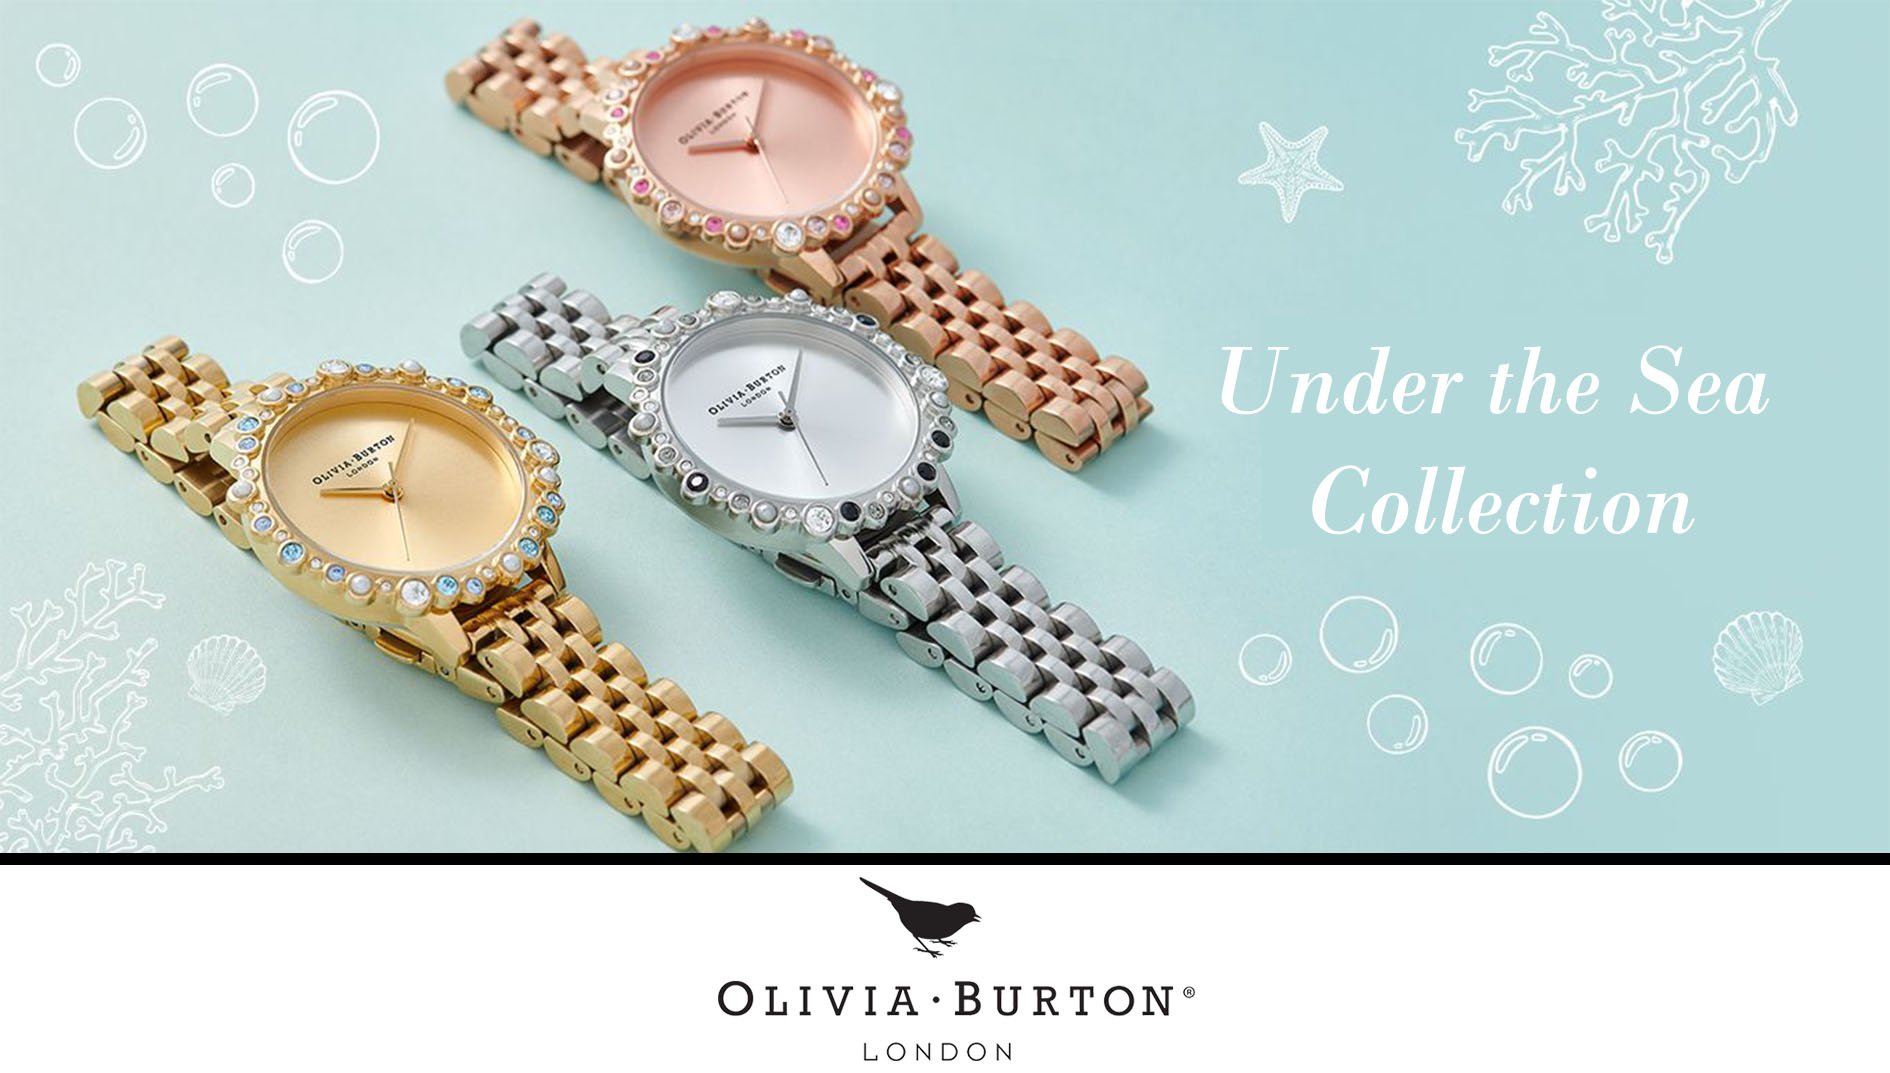 Olivia Burton's under the sea collection